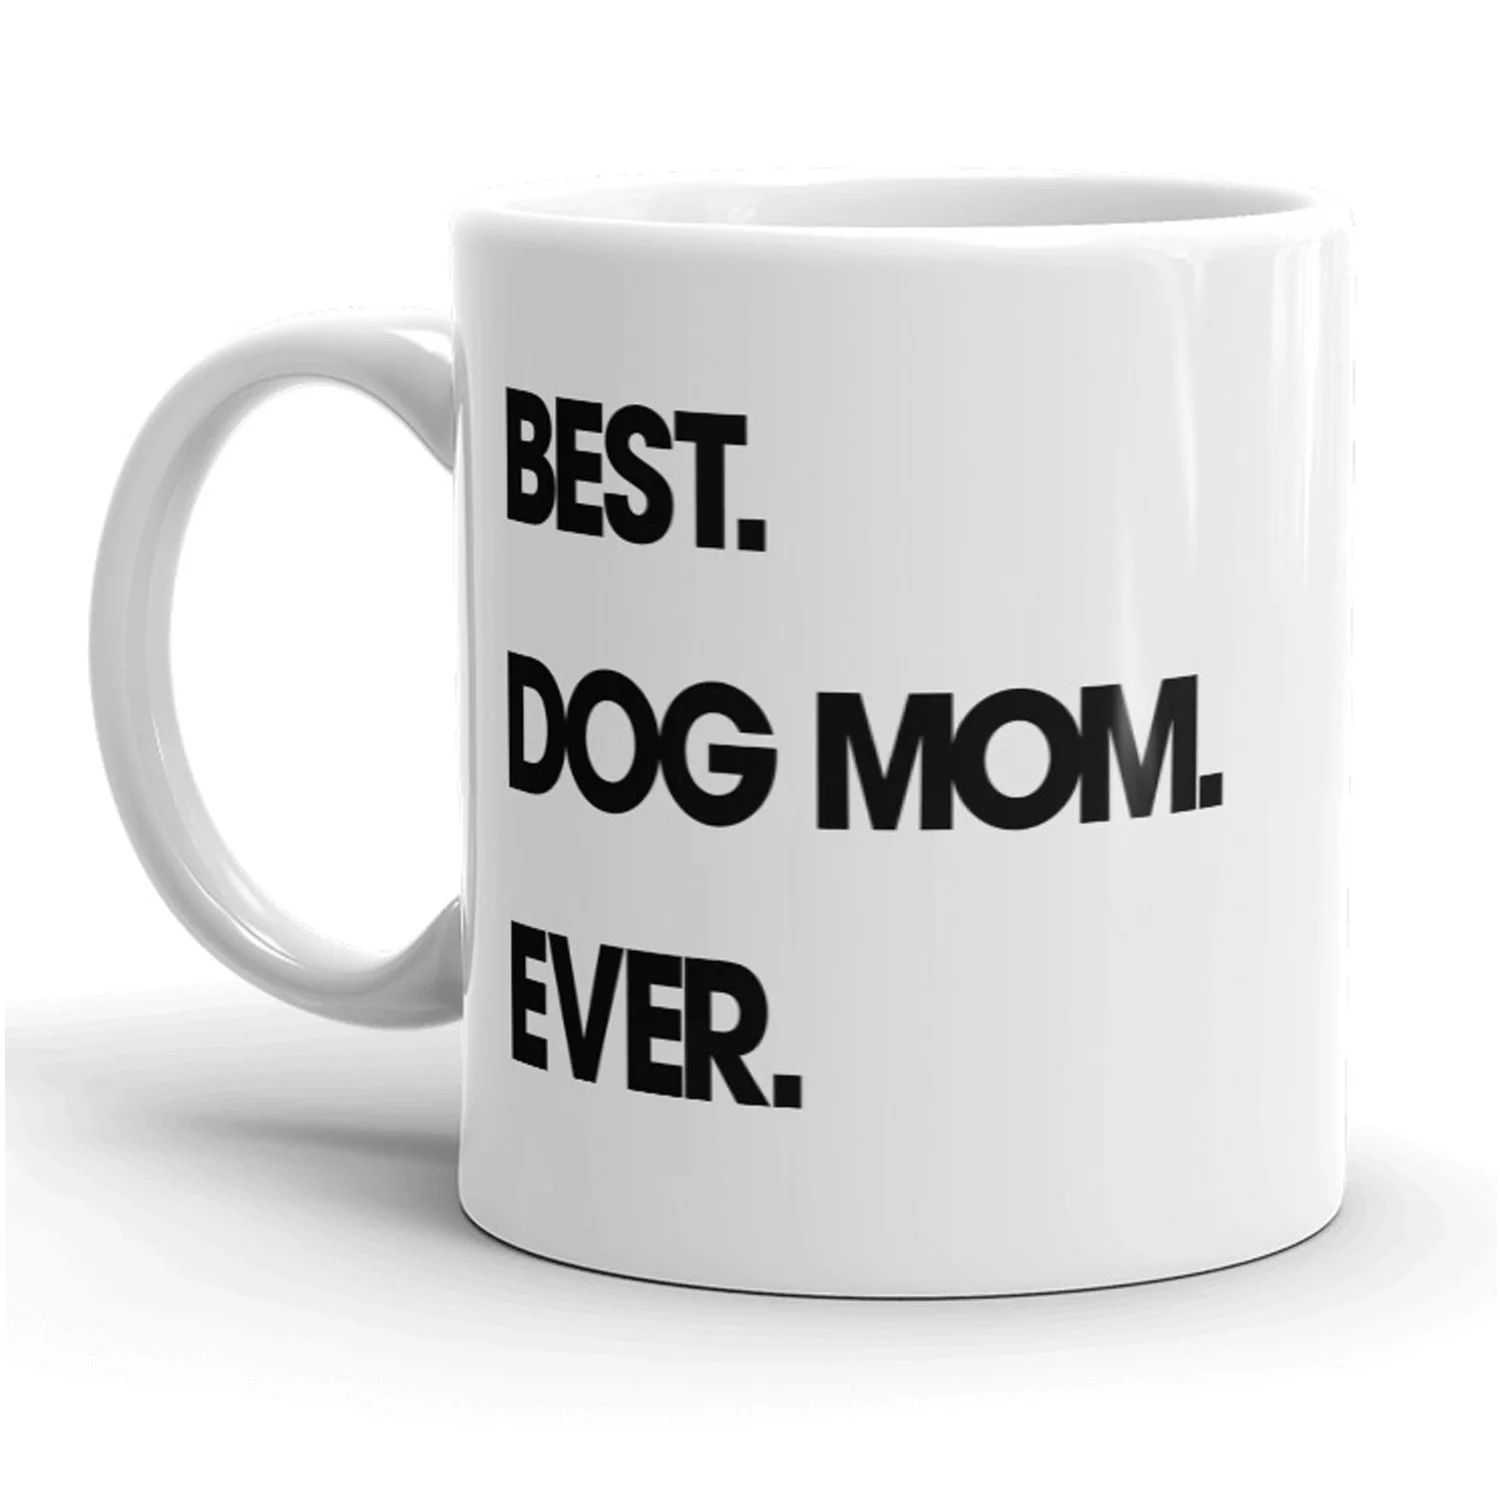 Best Dog Mom Ever Mug Funny Pet Puppy Coffee Cup - 11oz | Walmart (US)